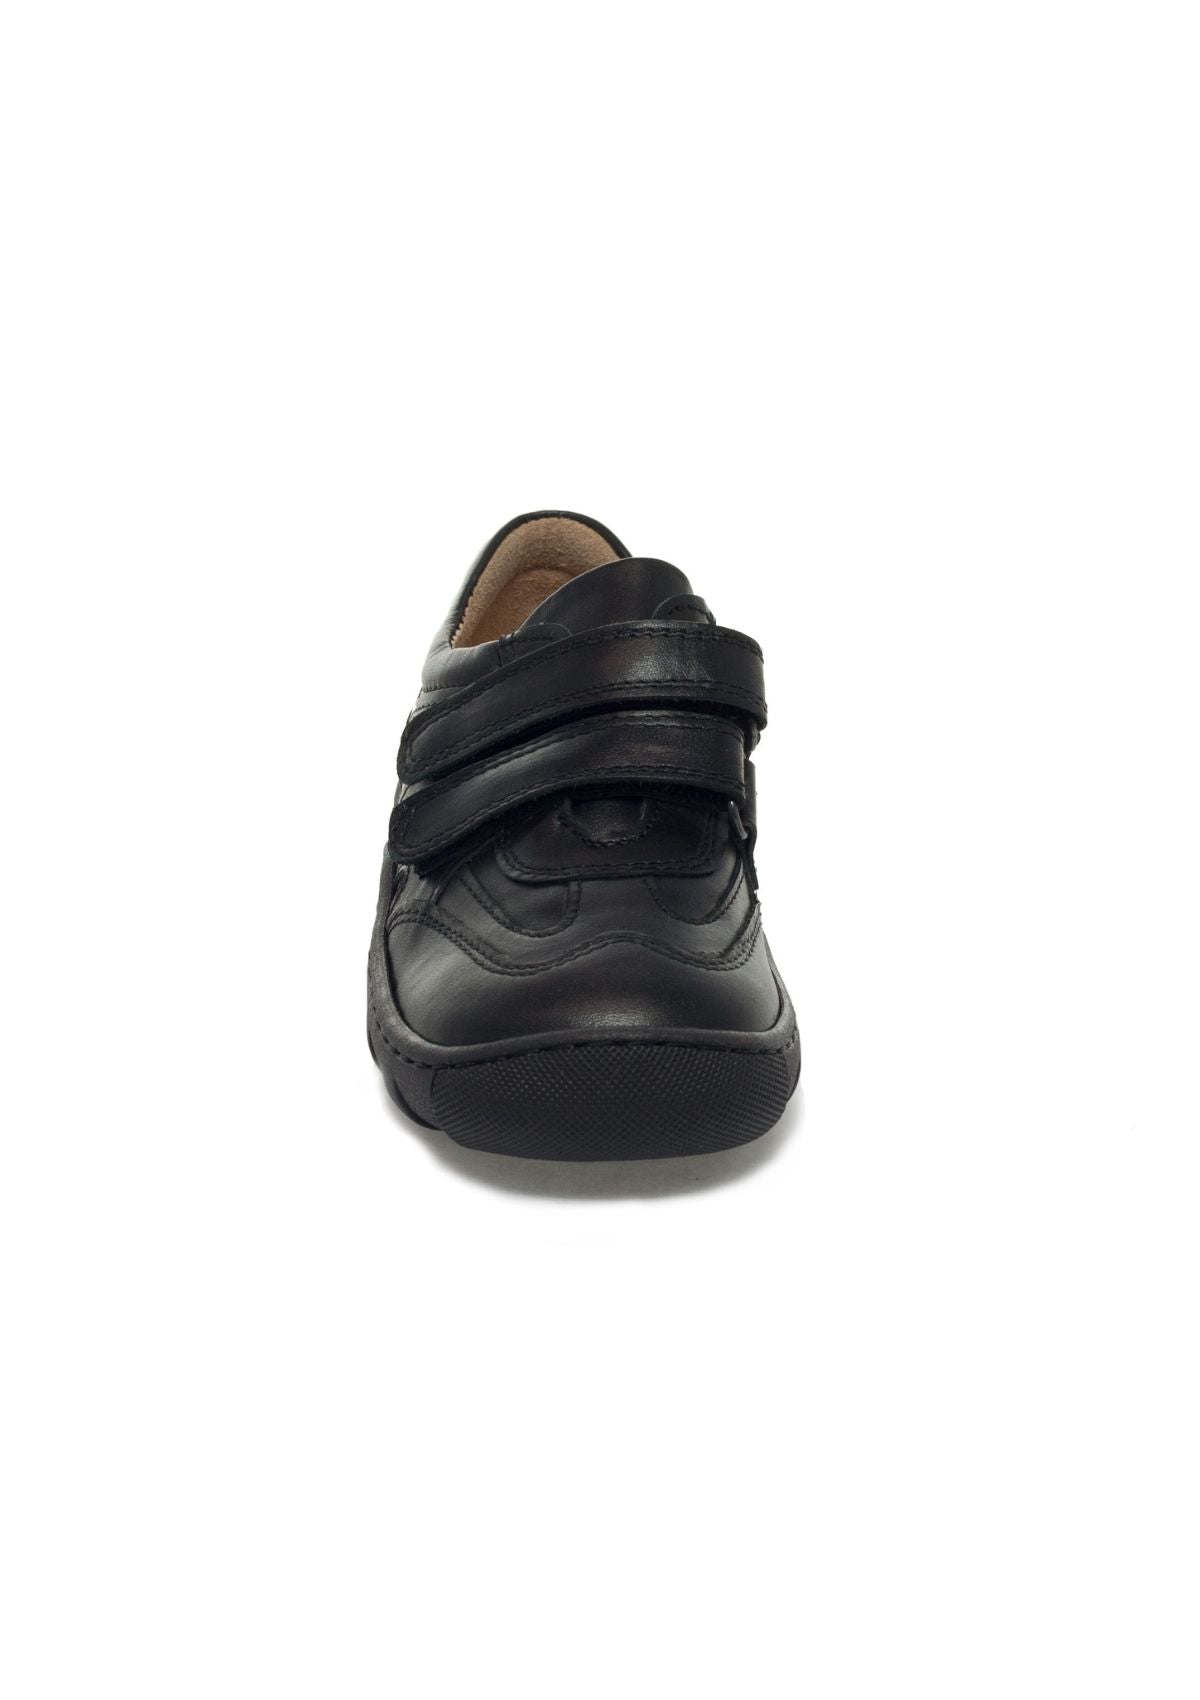 Boys School Shoe-Petasil-Victor (Black Leather) Front